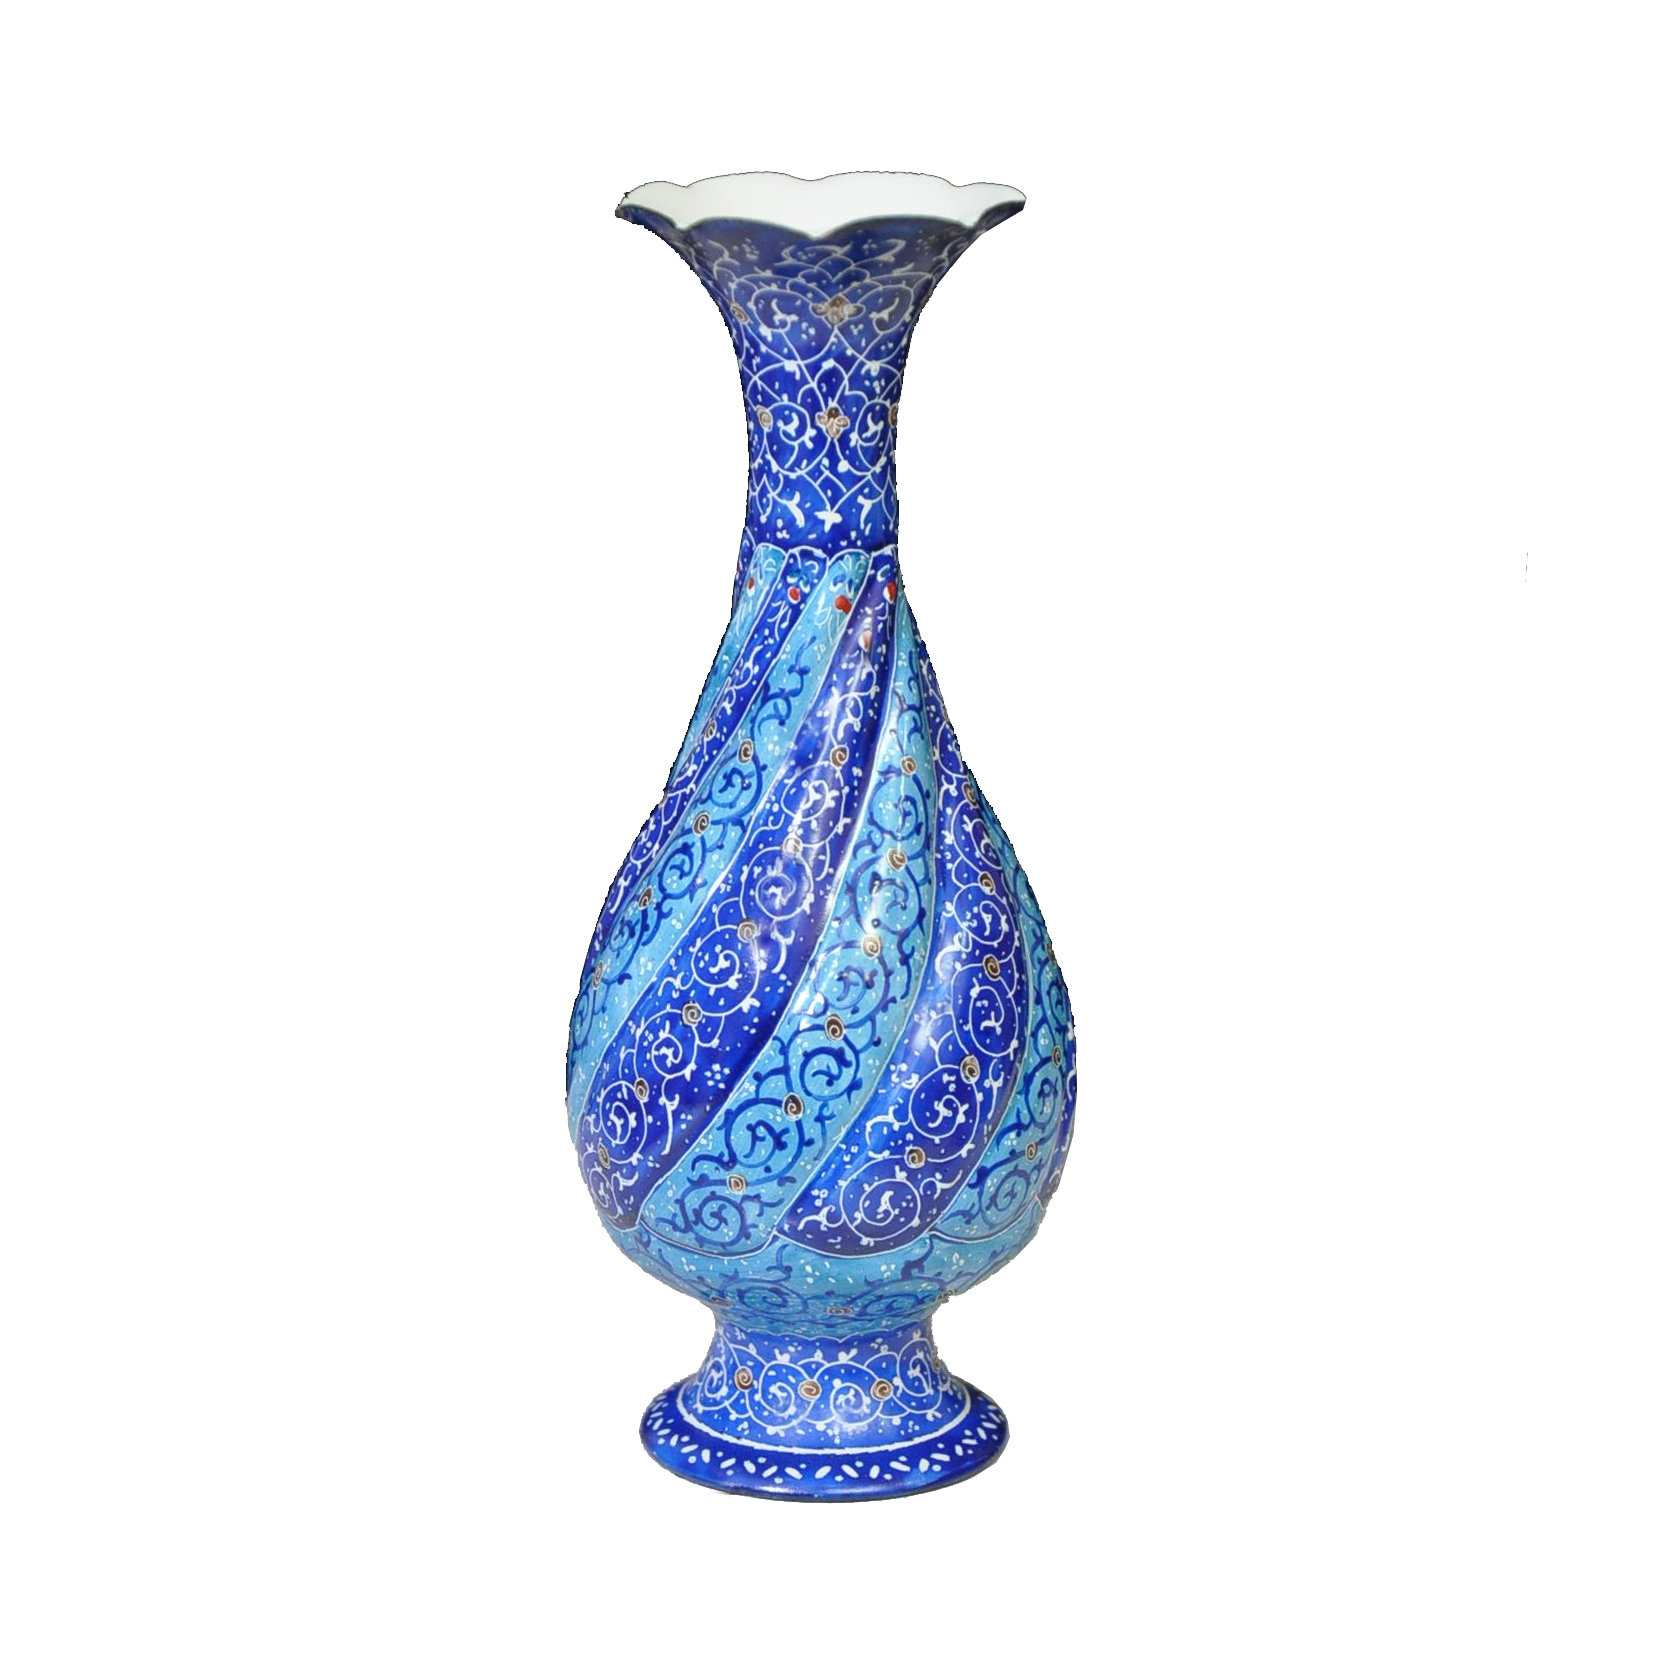 Copper Enamel vase, code 20